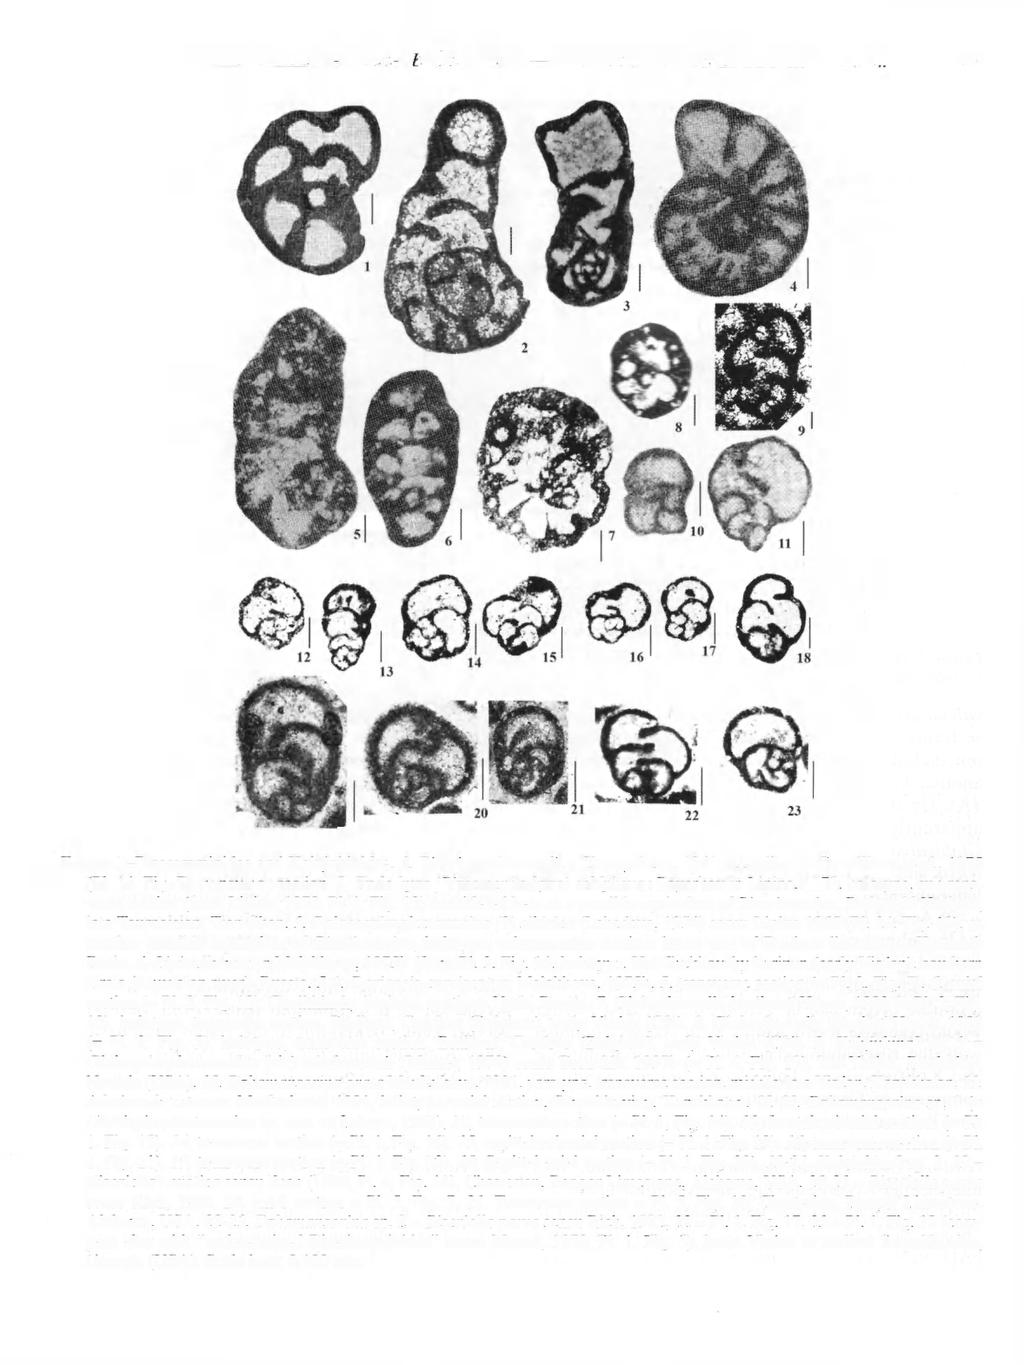 VACHARD-GAILLOT-PILLE-BEAZEJOWSKI PROBLEMS ON BISERIAMMINOIDEA... 457 19 FIGURE 2-Biseramminidae and Koktjubinidae. 1. Biseriammina uralica Chernysheva, 1941 according to Grozdilova et al., 1975 (PI.